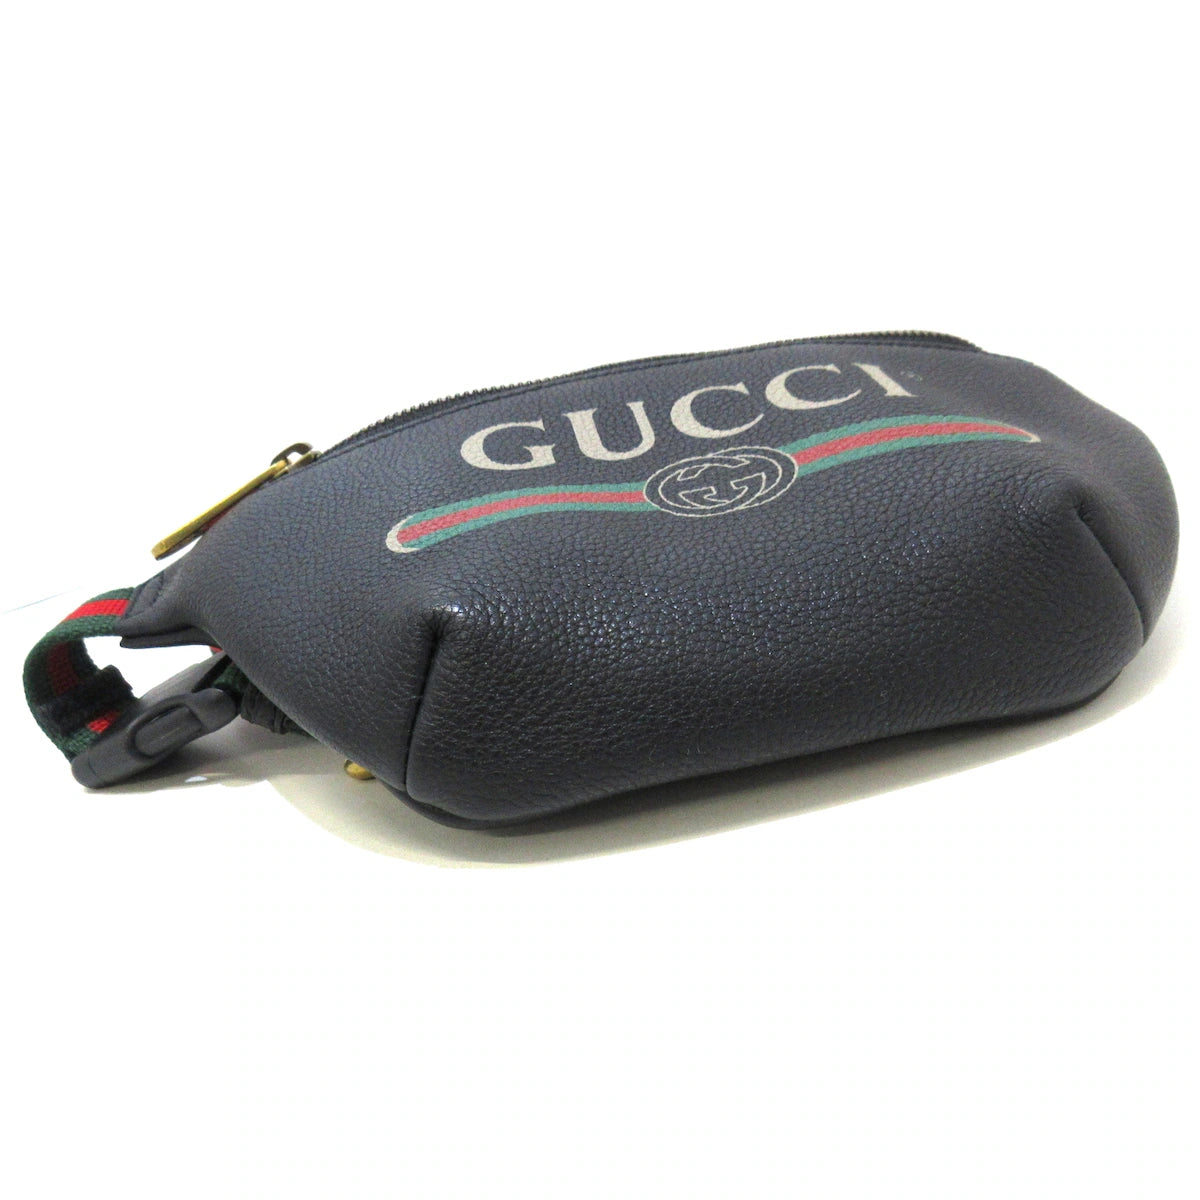 GUCCI - Print Small Belt Bag Bum Bag Black Red Green Leather